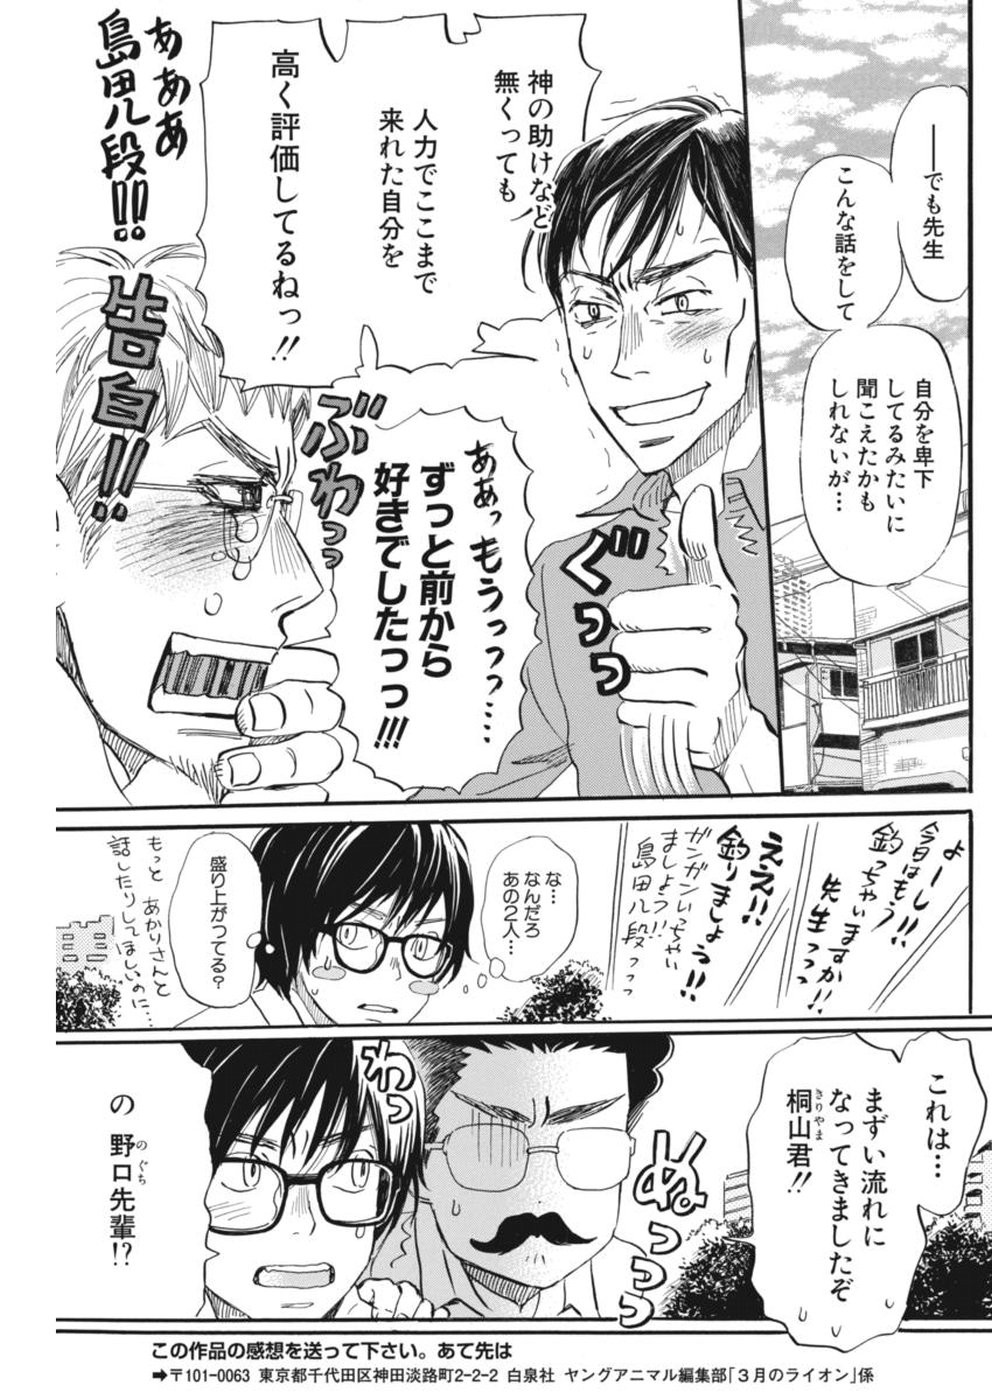 3 Gatsu no Lion - Chapter 145 - Page 7